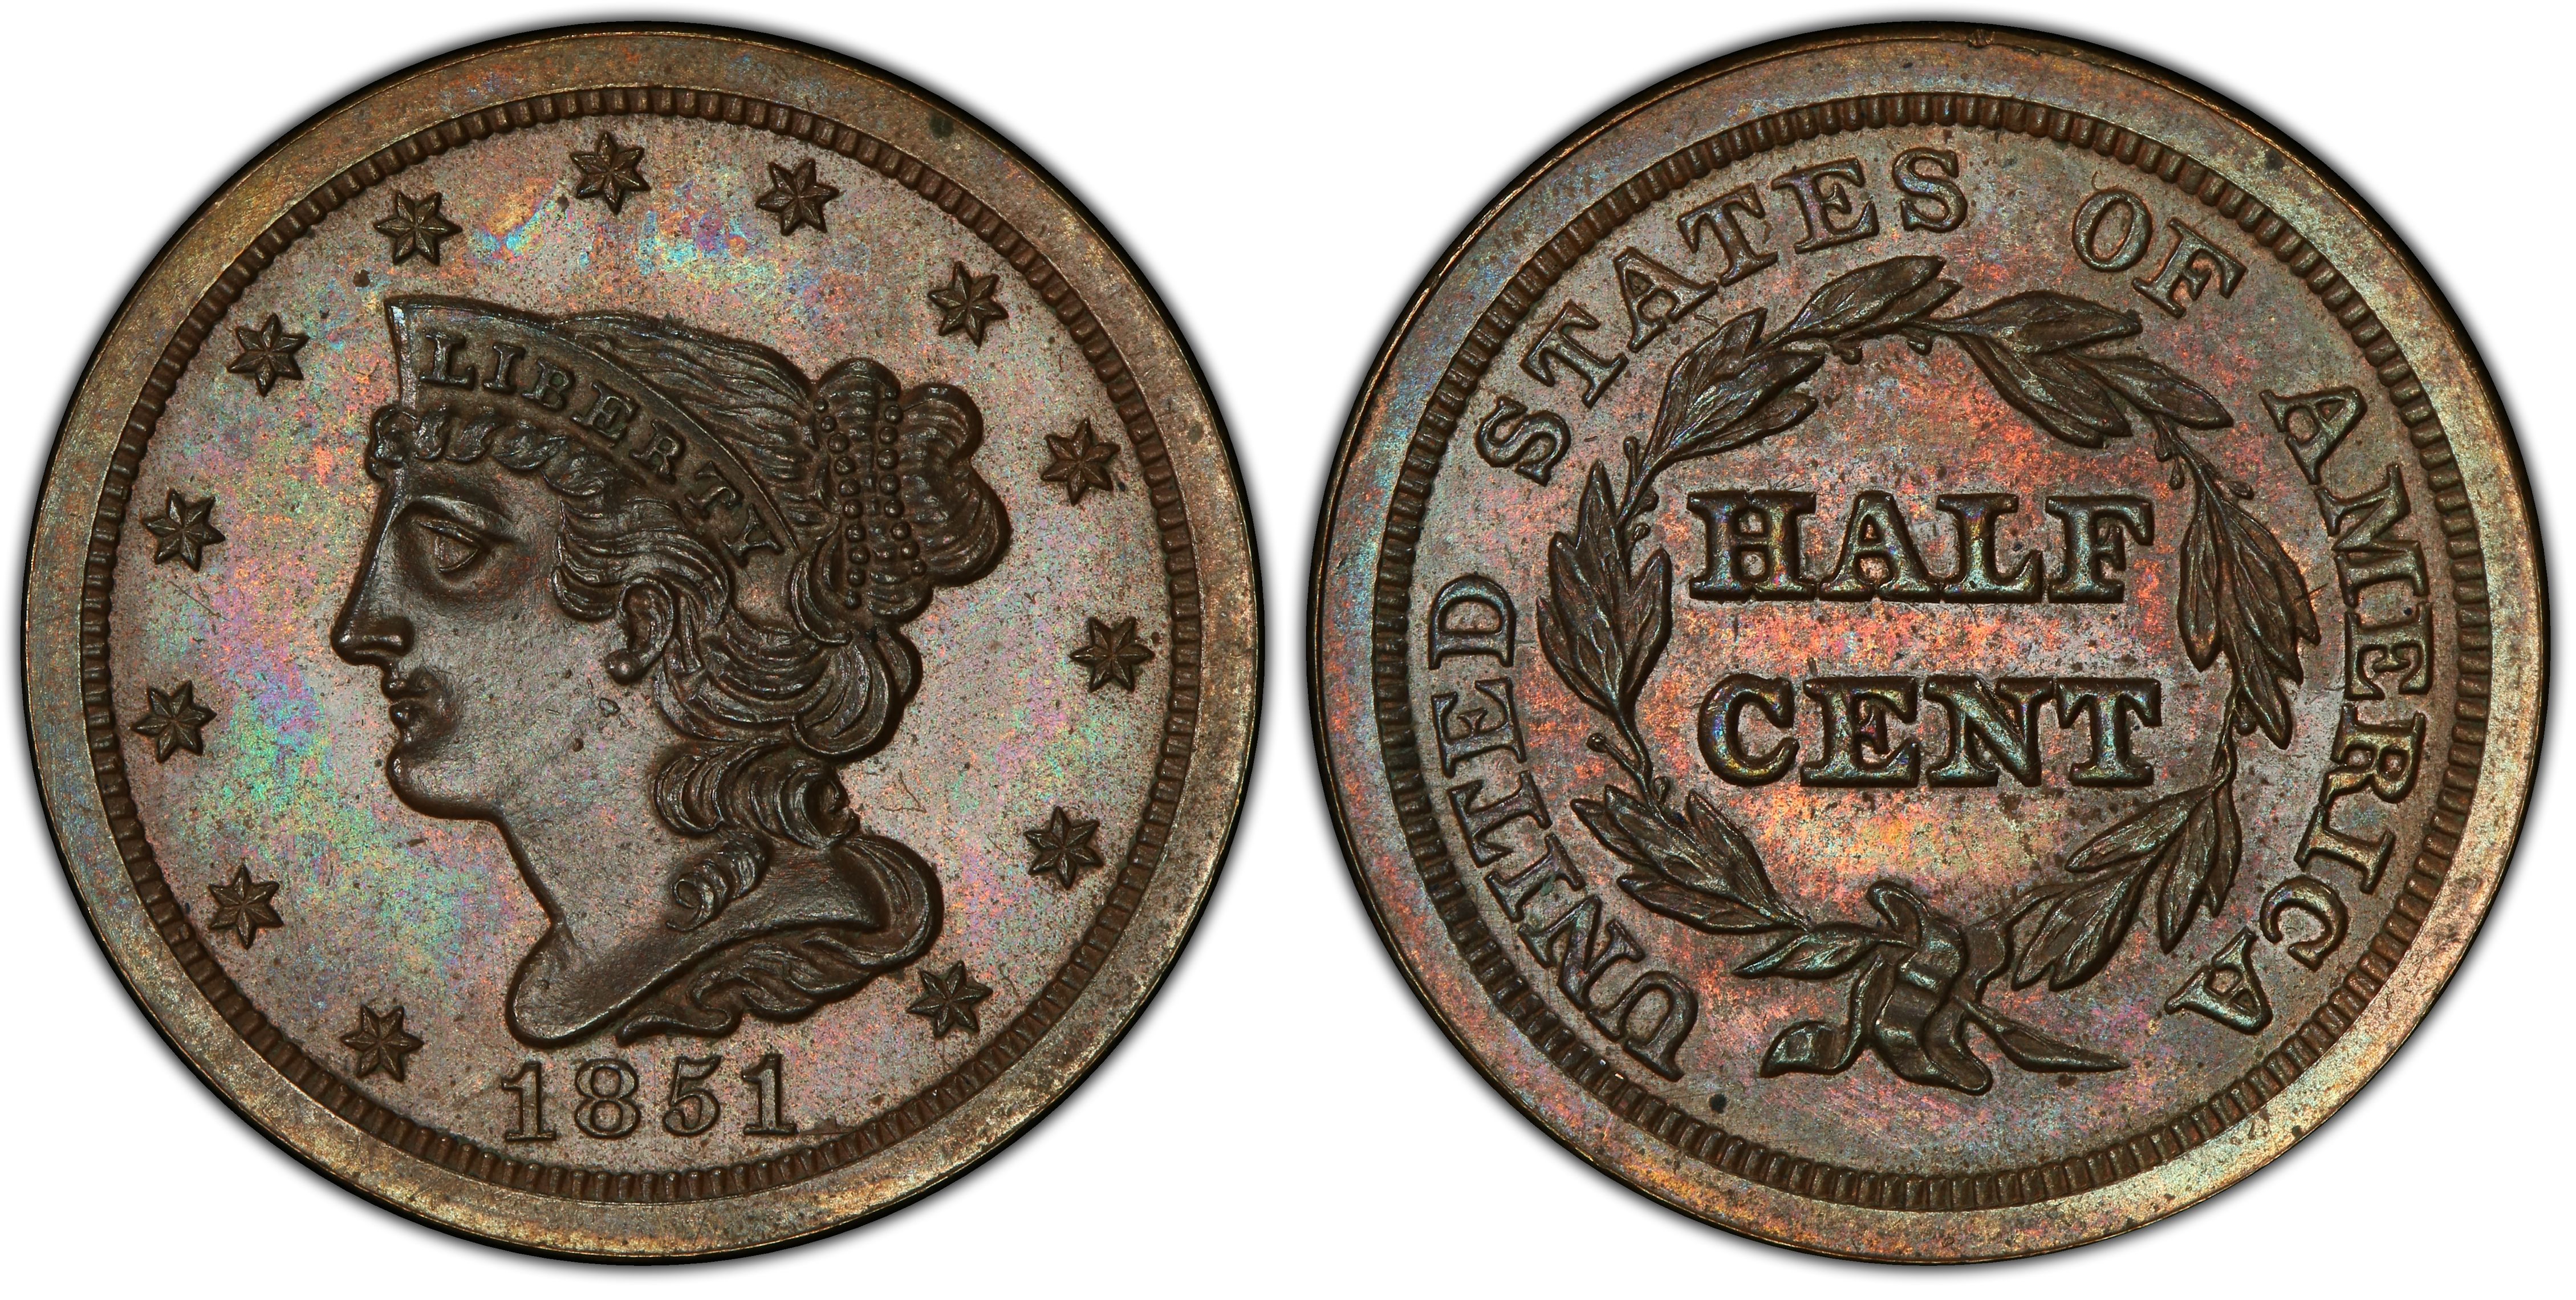 Value of 1851 Braided Hair Half Cent